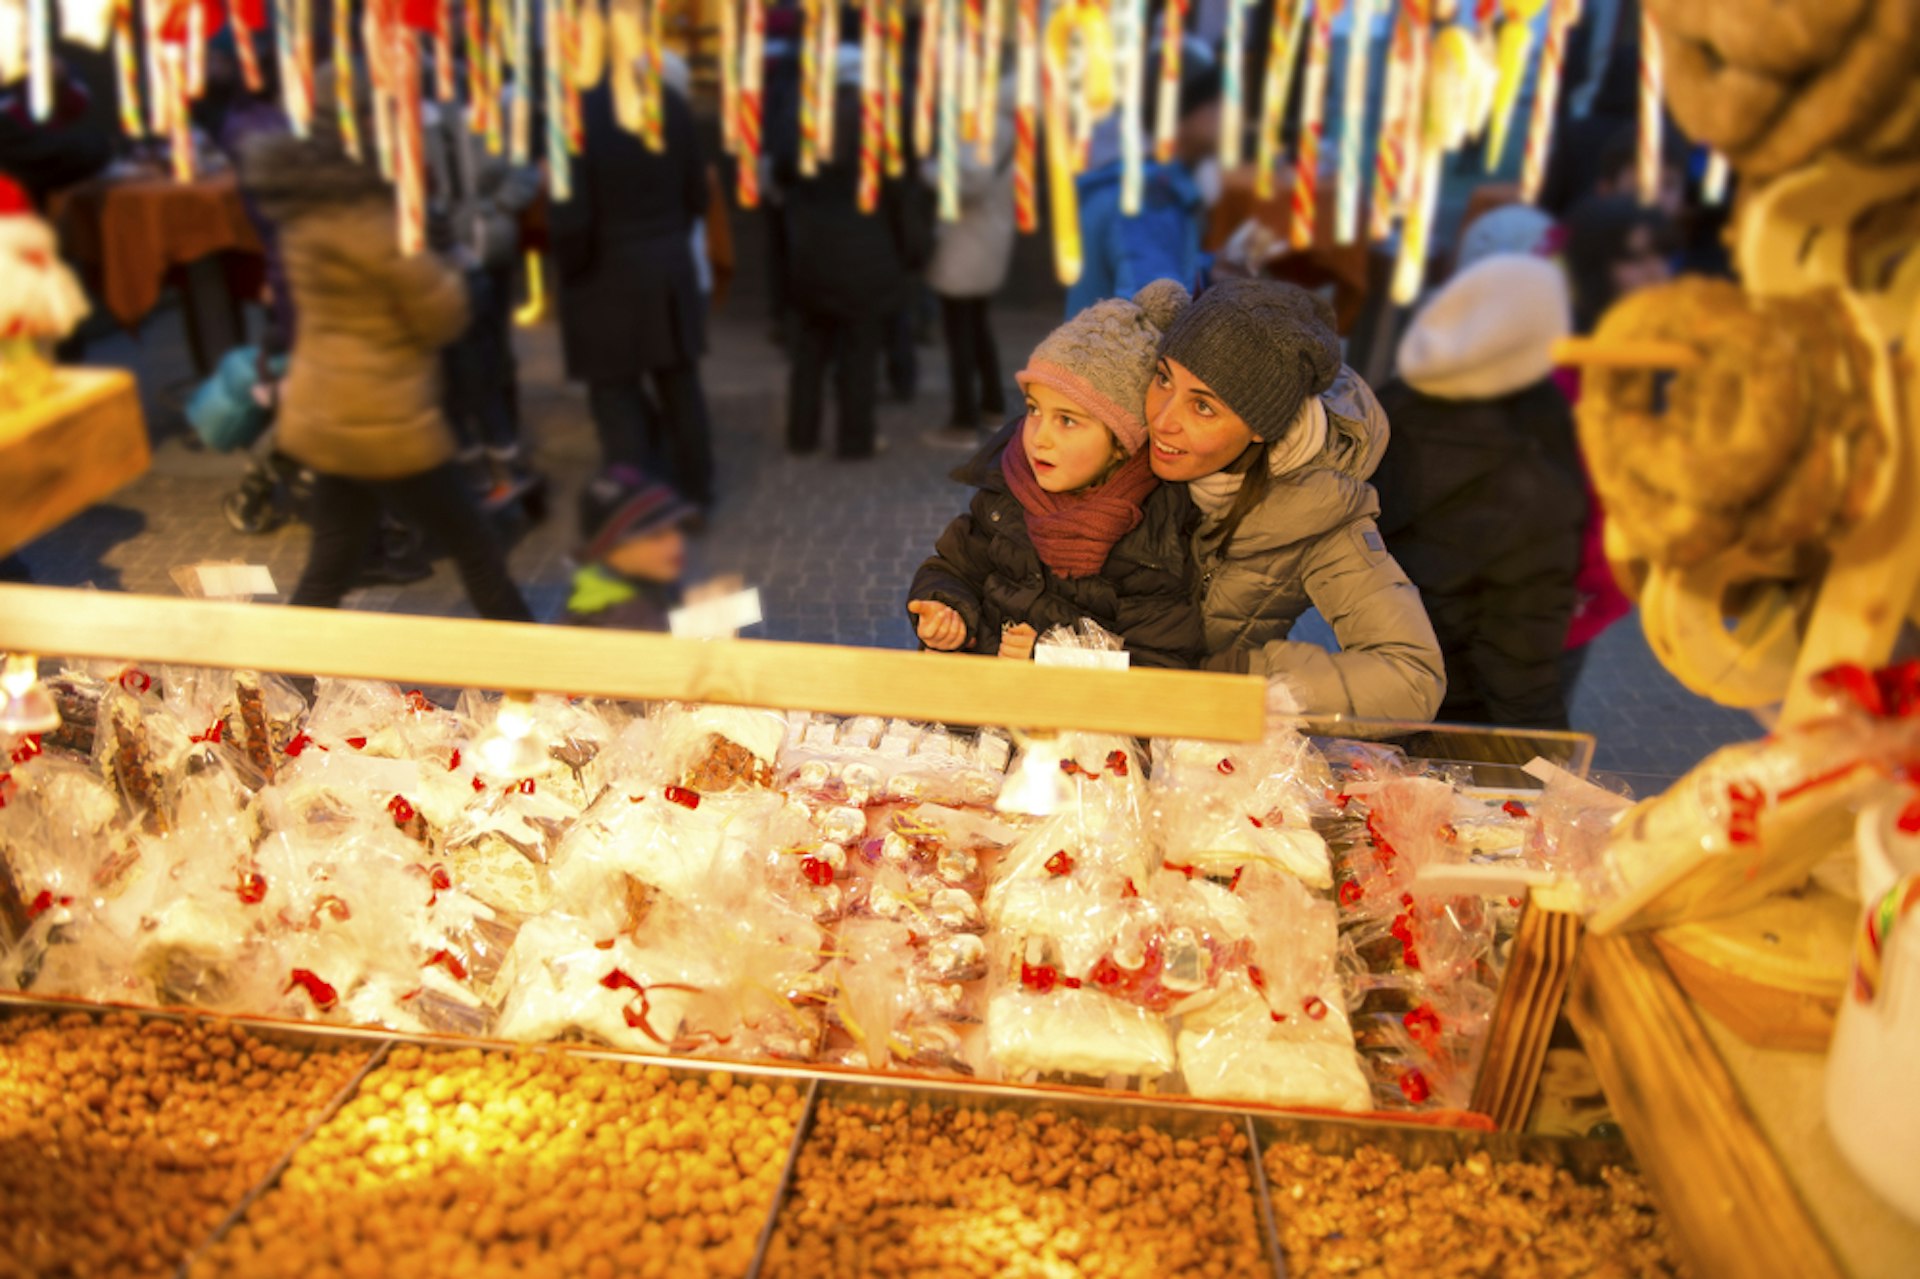 Enjoying the Christmas market in Merano